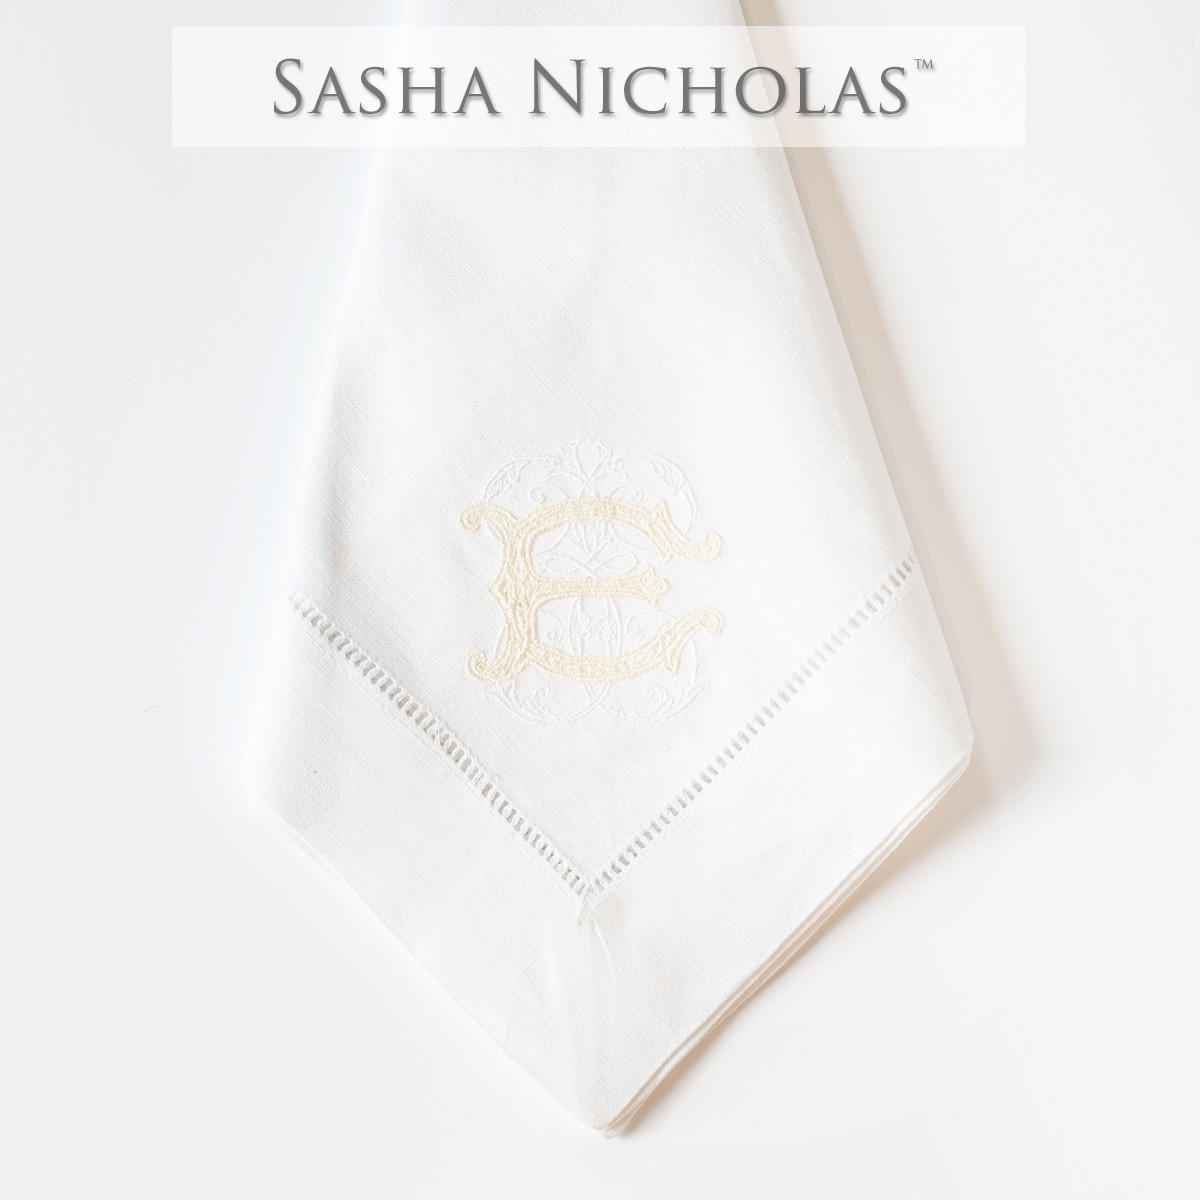 Mcnab-everett Sasha Nicholas White Linen Dinner Napkin, Couture Monogram, McNab-Everett SNLIN100, Sasha Nicholas